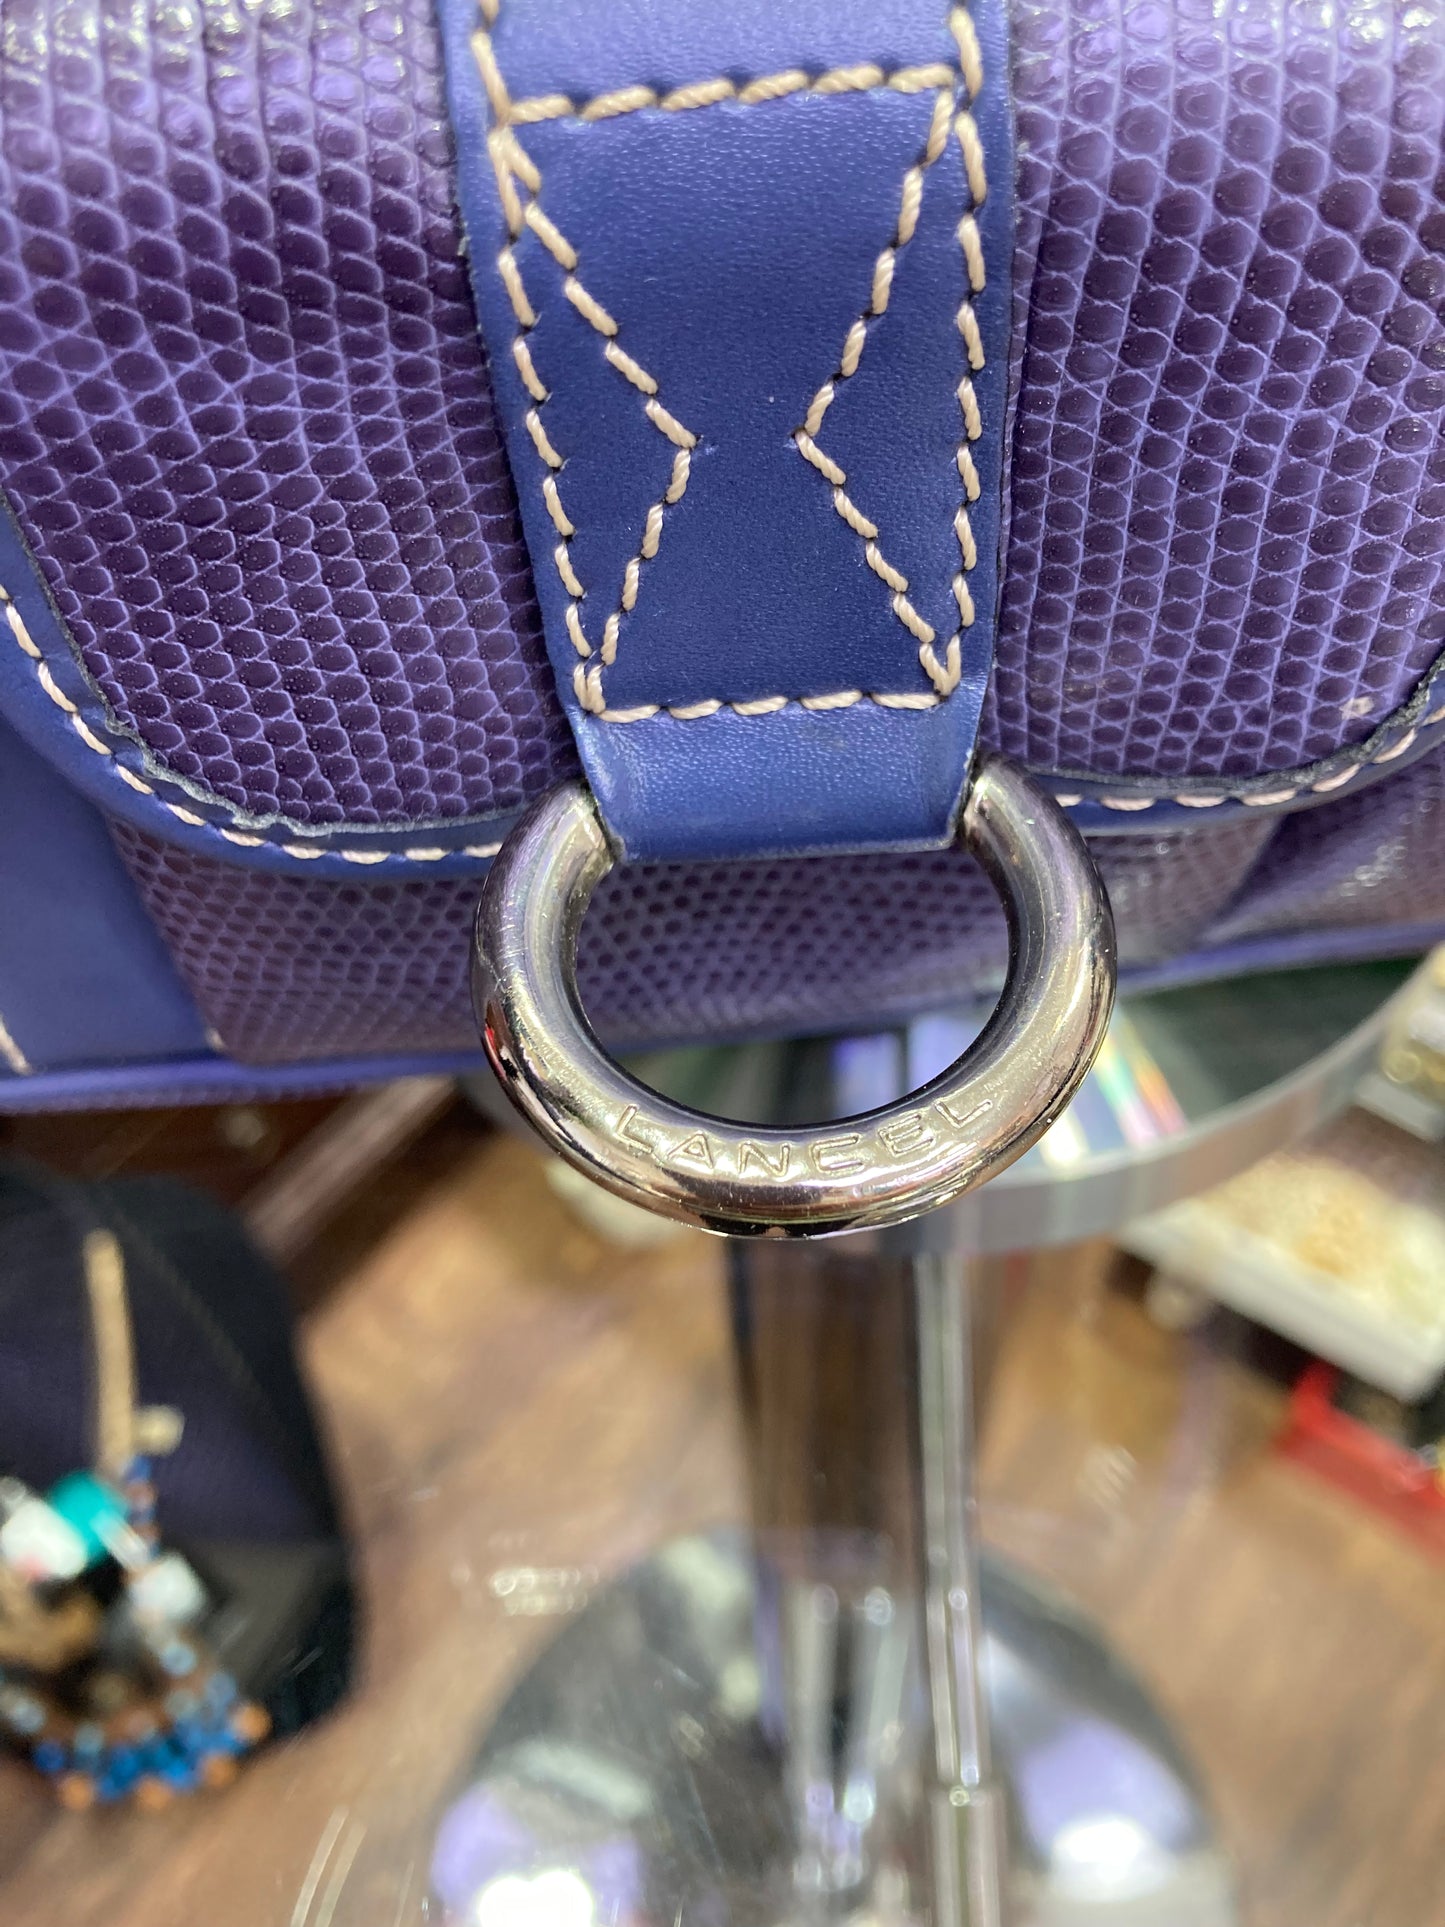 Lancelot Designer Handbag leather purple color